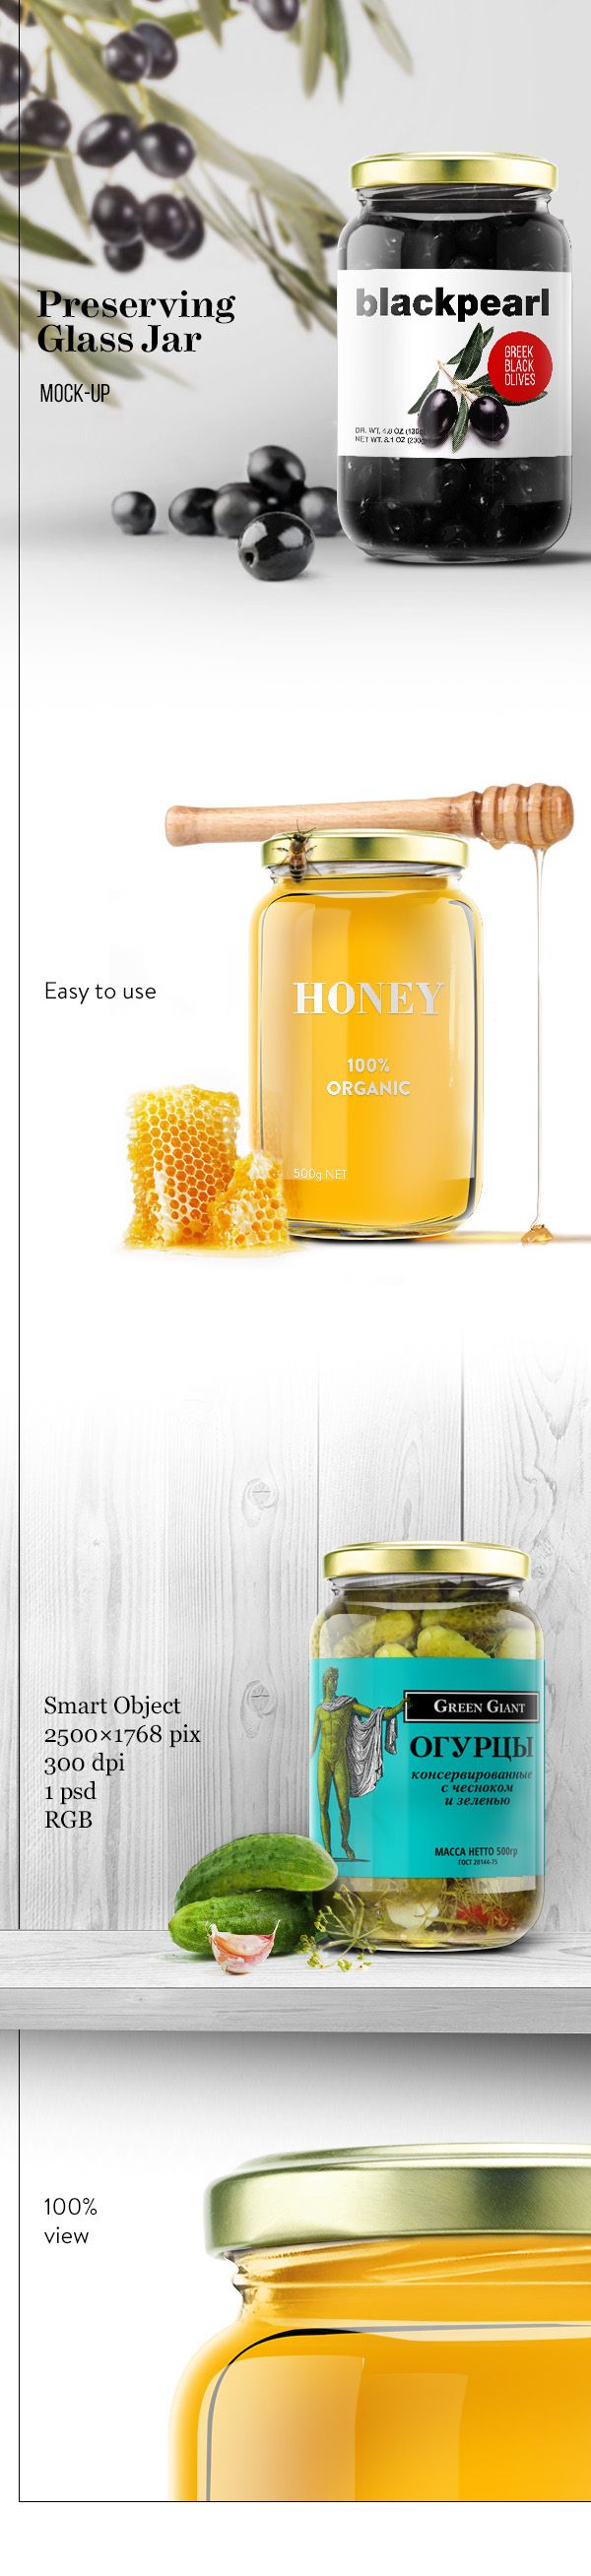 glass Label mock-up free psd honey olive cucumber tag sticker template preserving glass jar download